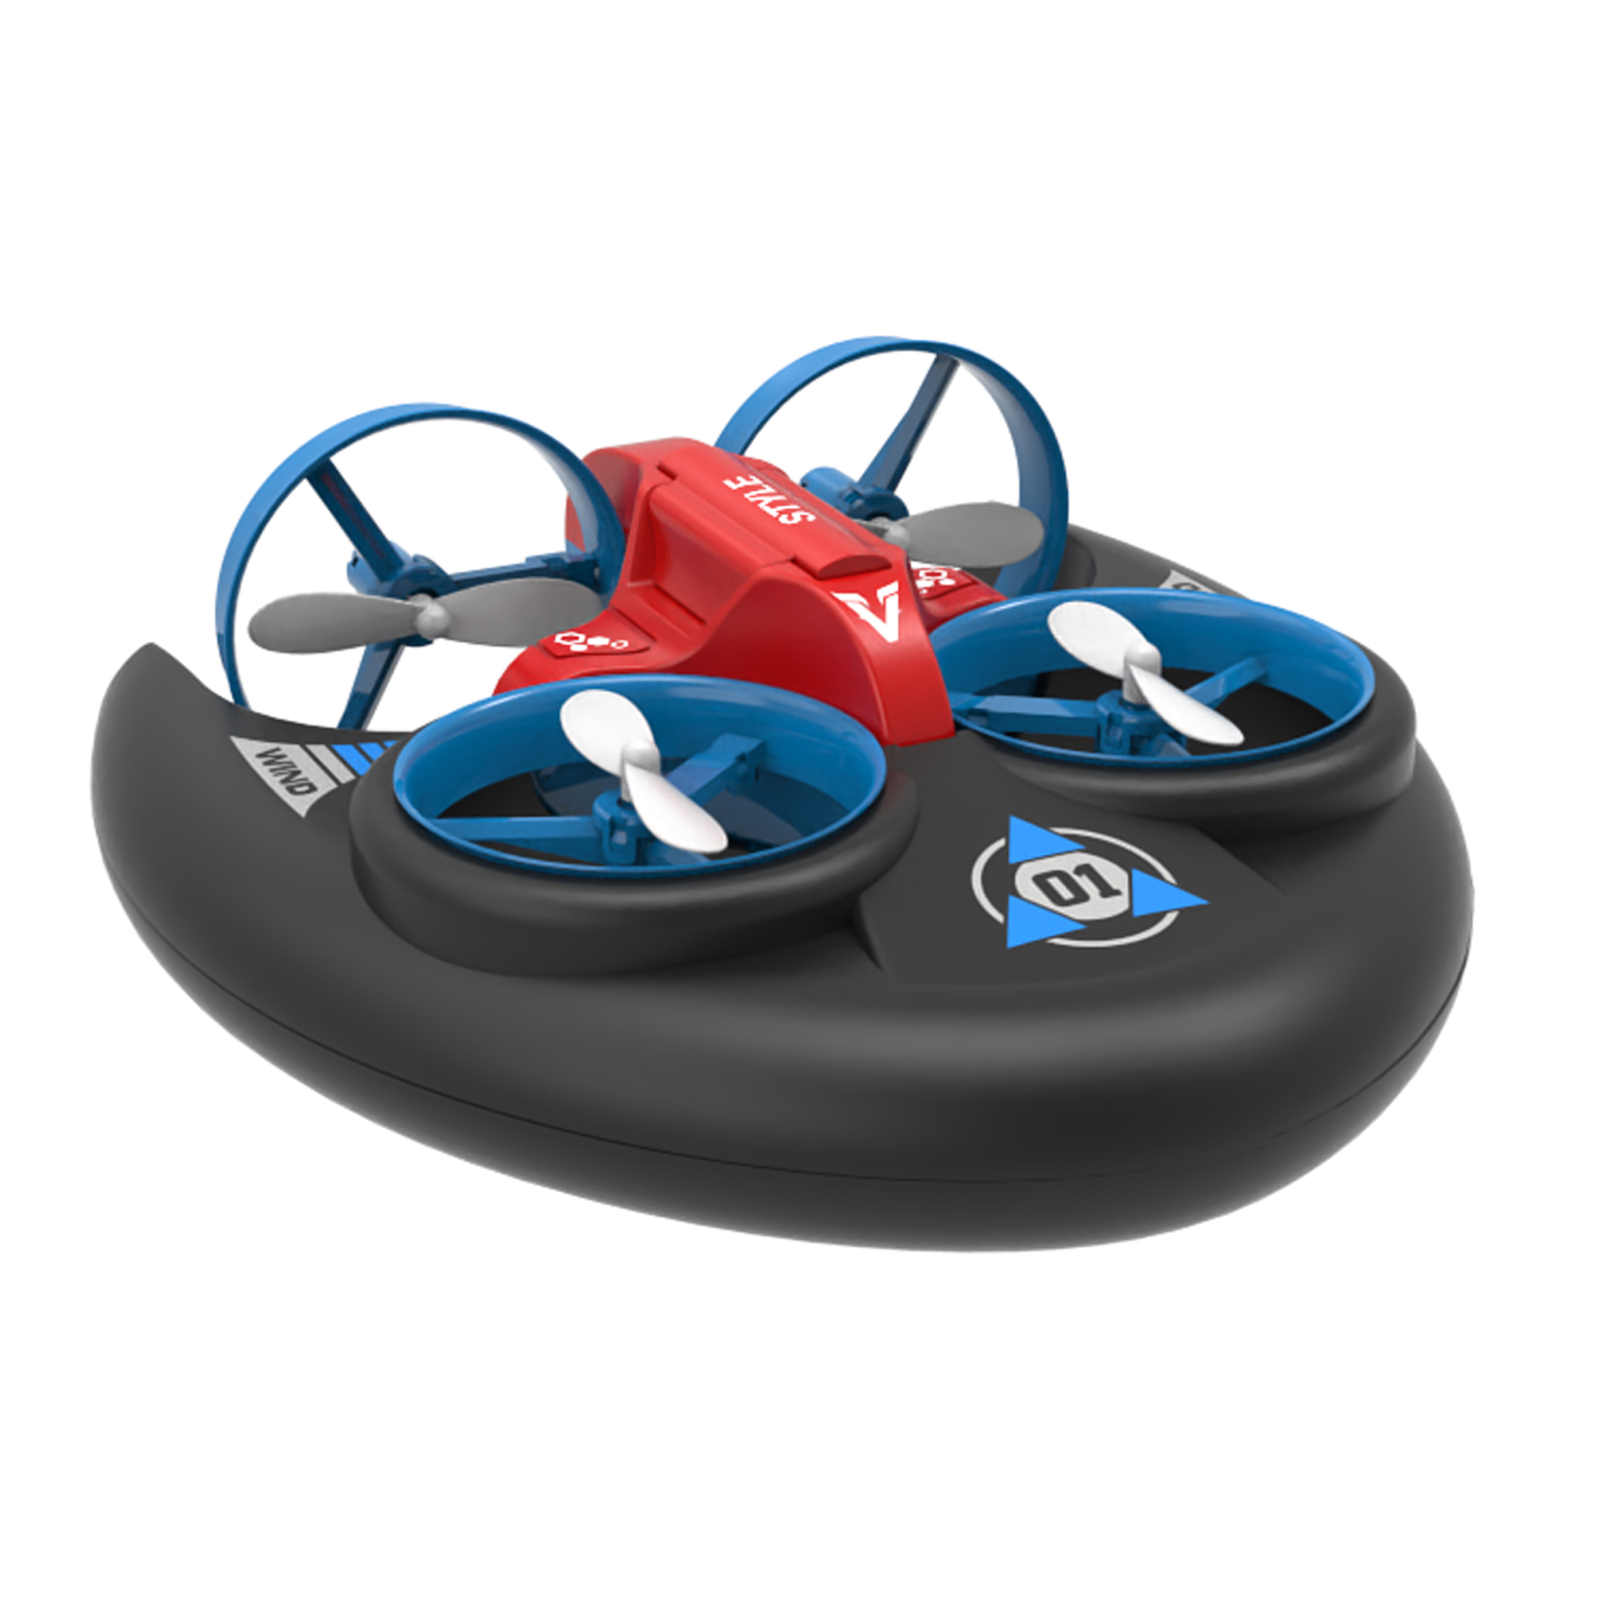 JJRC H101新品水陆空四轴飞行气垫船遥控车三合一迷你无人机玩具